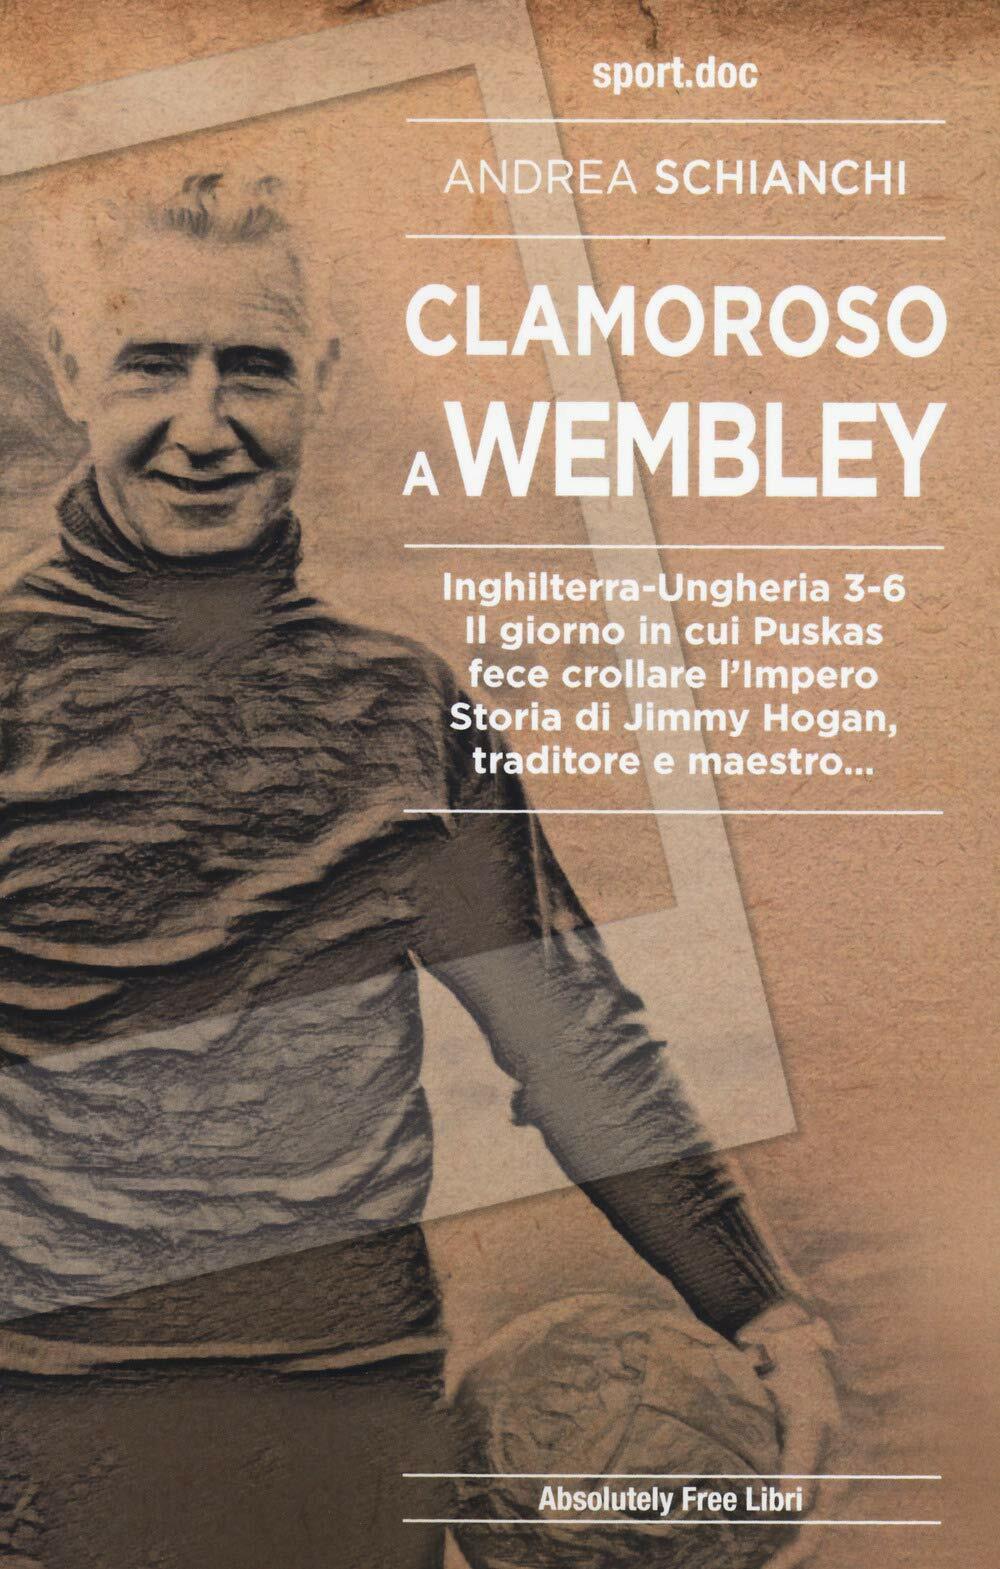 Clamoroso a Wembley - Andrea Schianchi - Absolutely Free, 2020